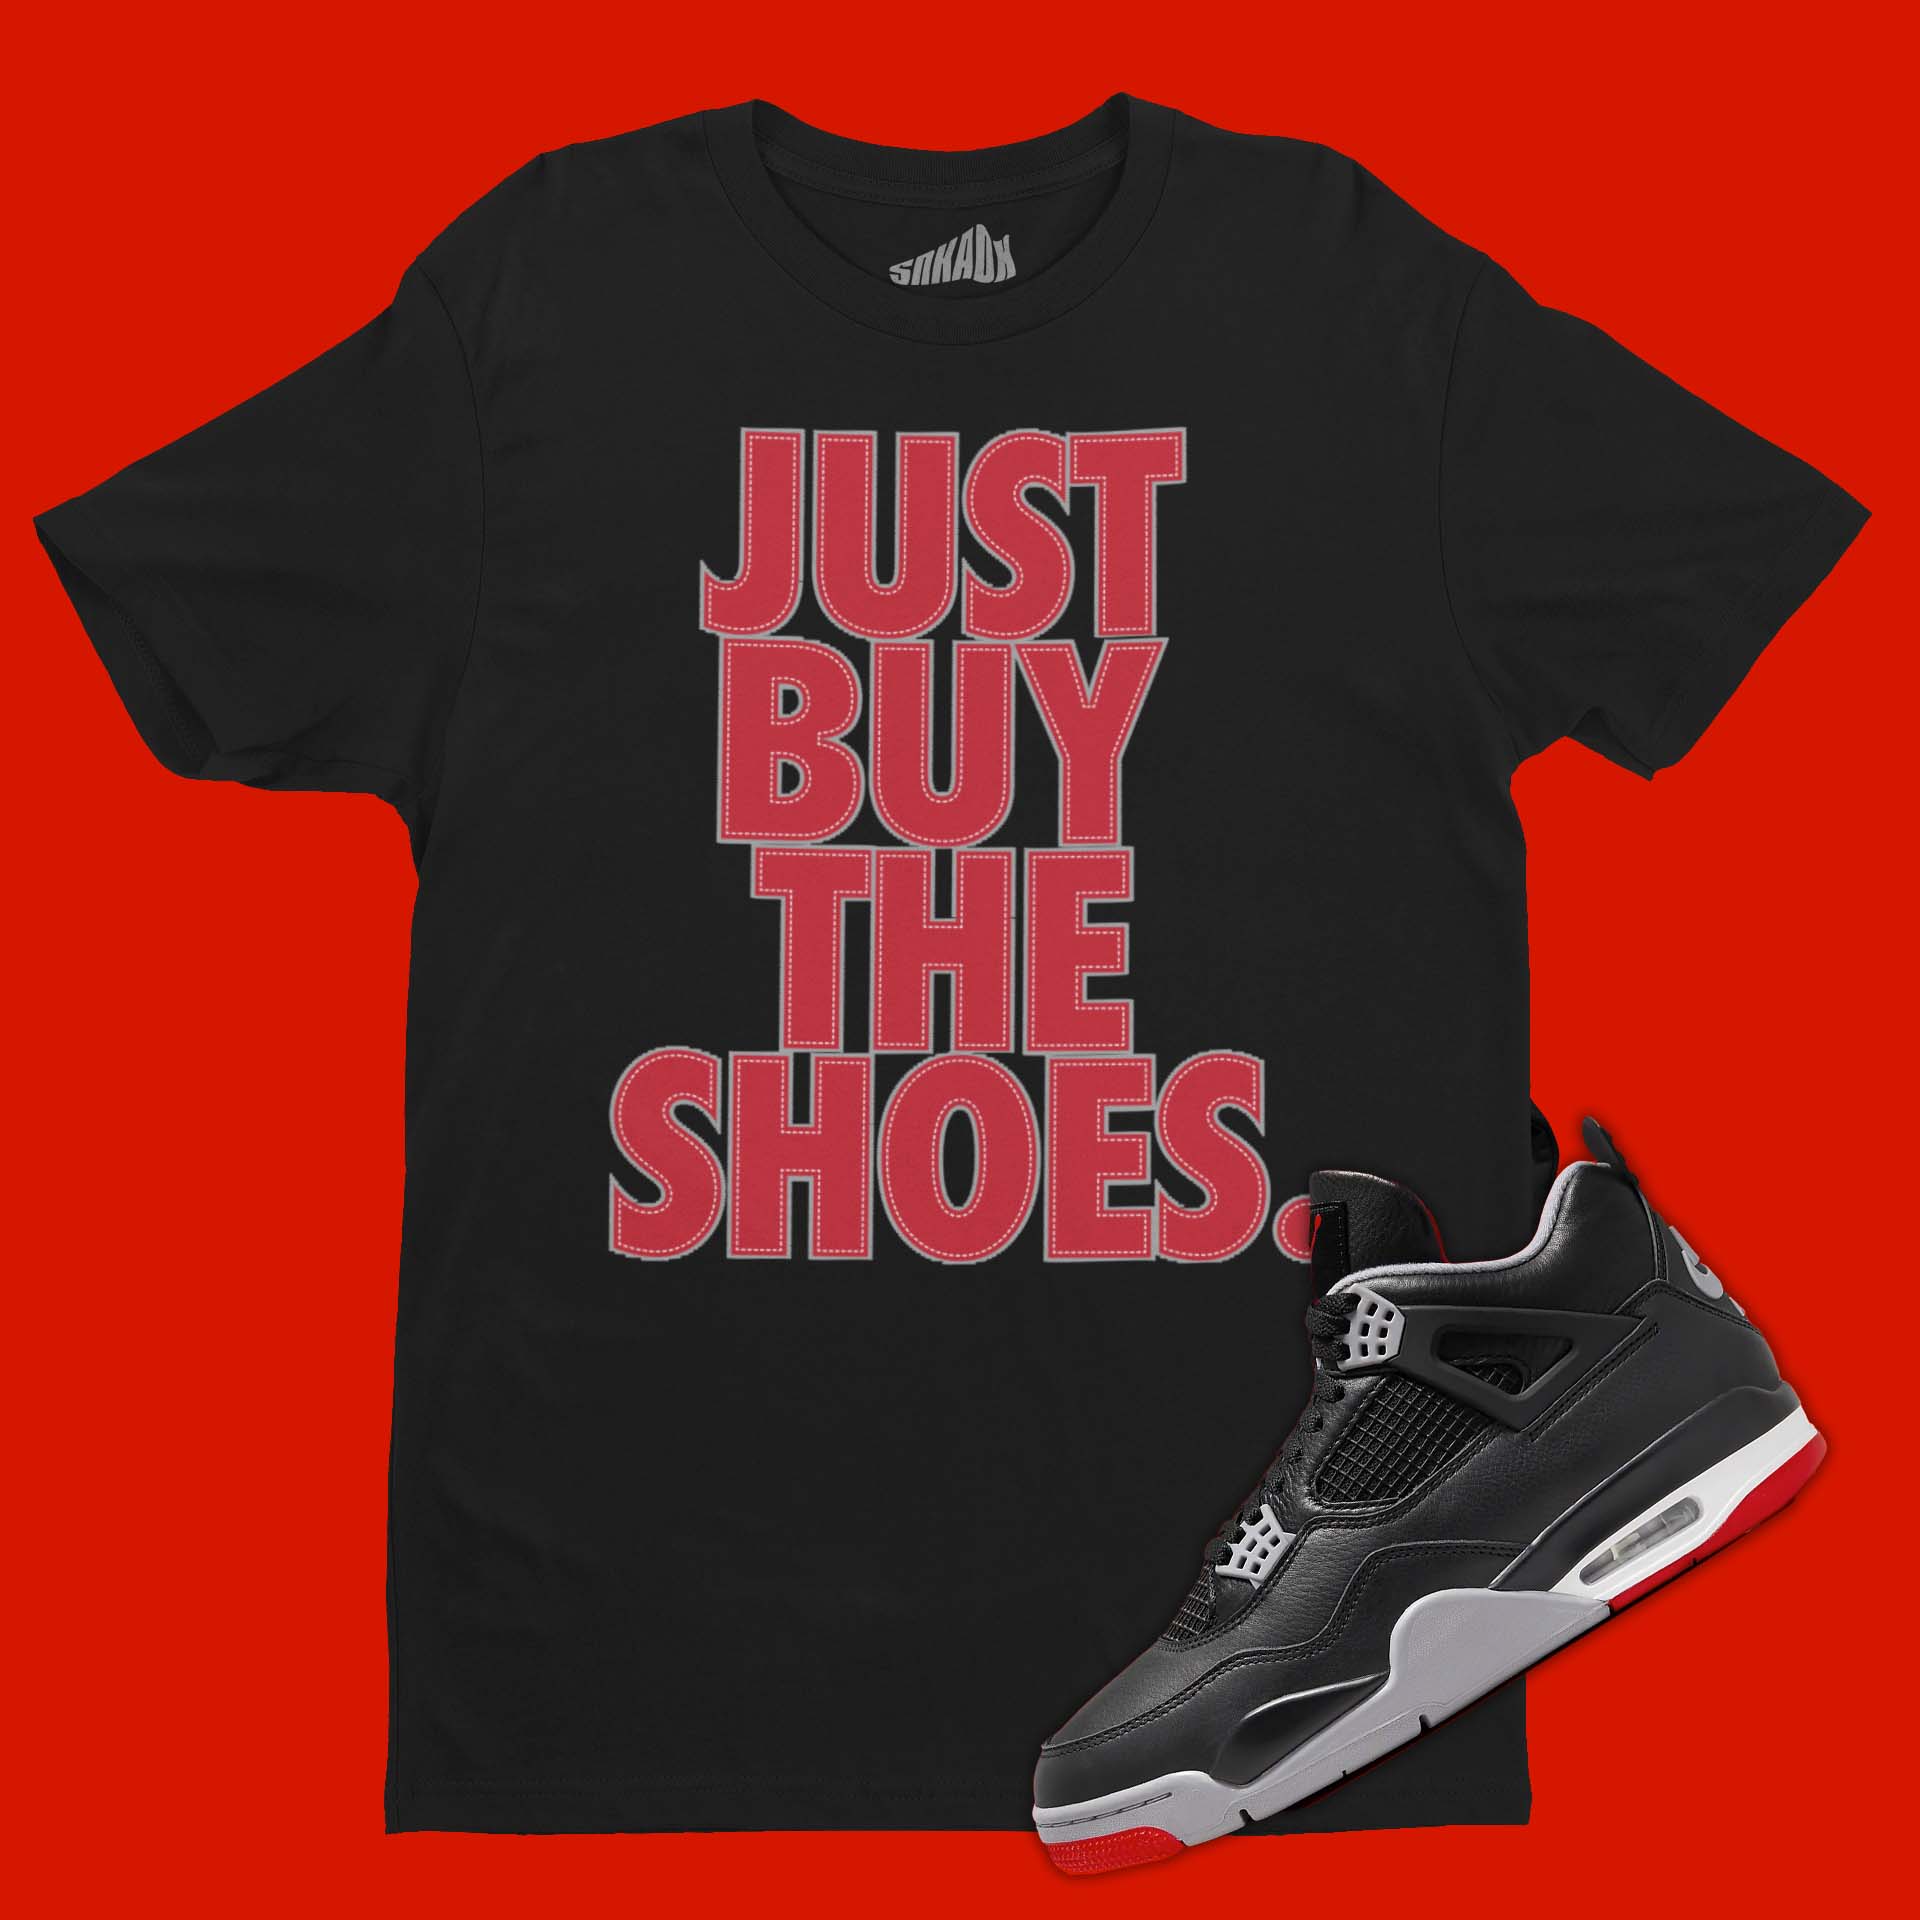 FonjepShops - Just Buy The Shoes T - Shirt for Air Jordan 4 Bred Reimagined  - Jordan Jumpman Classic Pants Carbon Black Gym Red